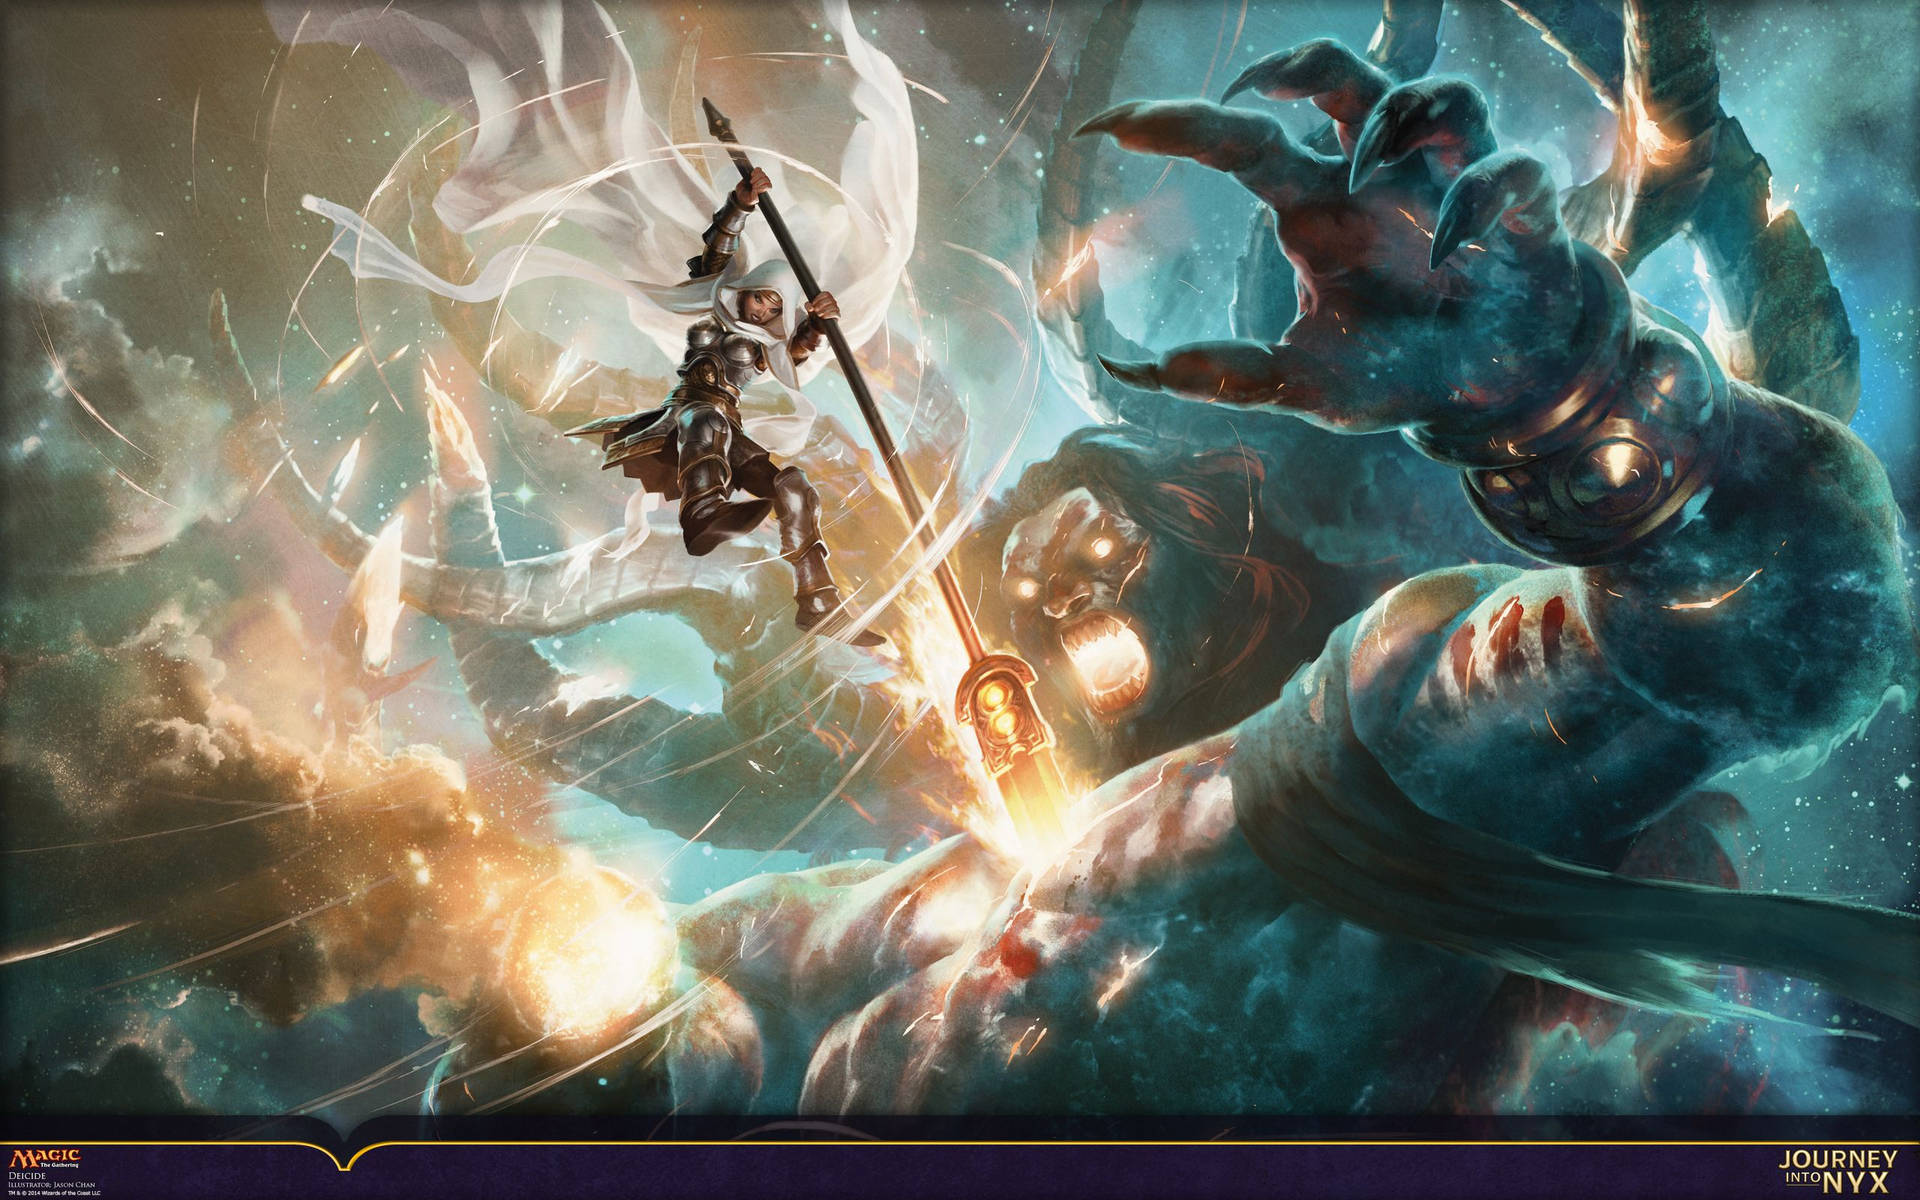 Intense Magic: The Gathering Battle Wallpaper